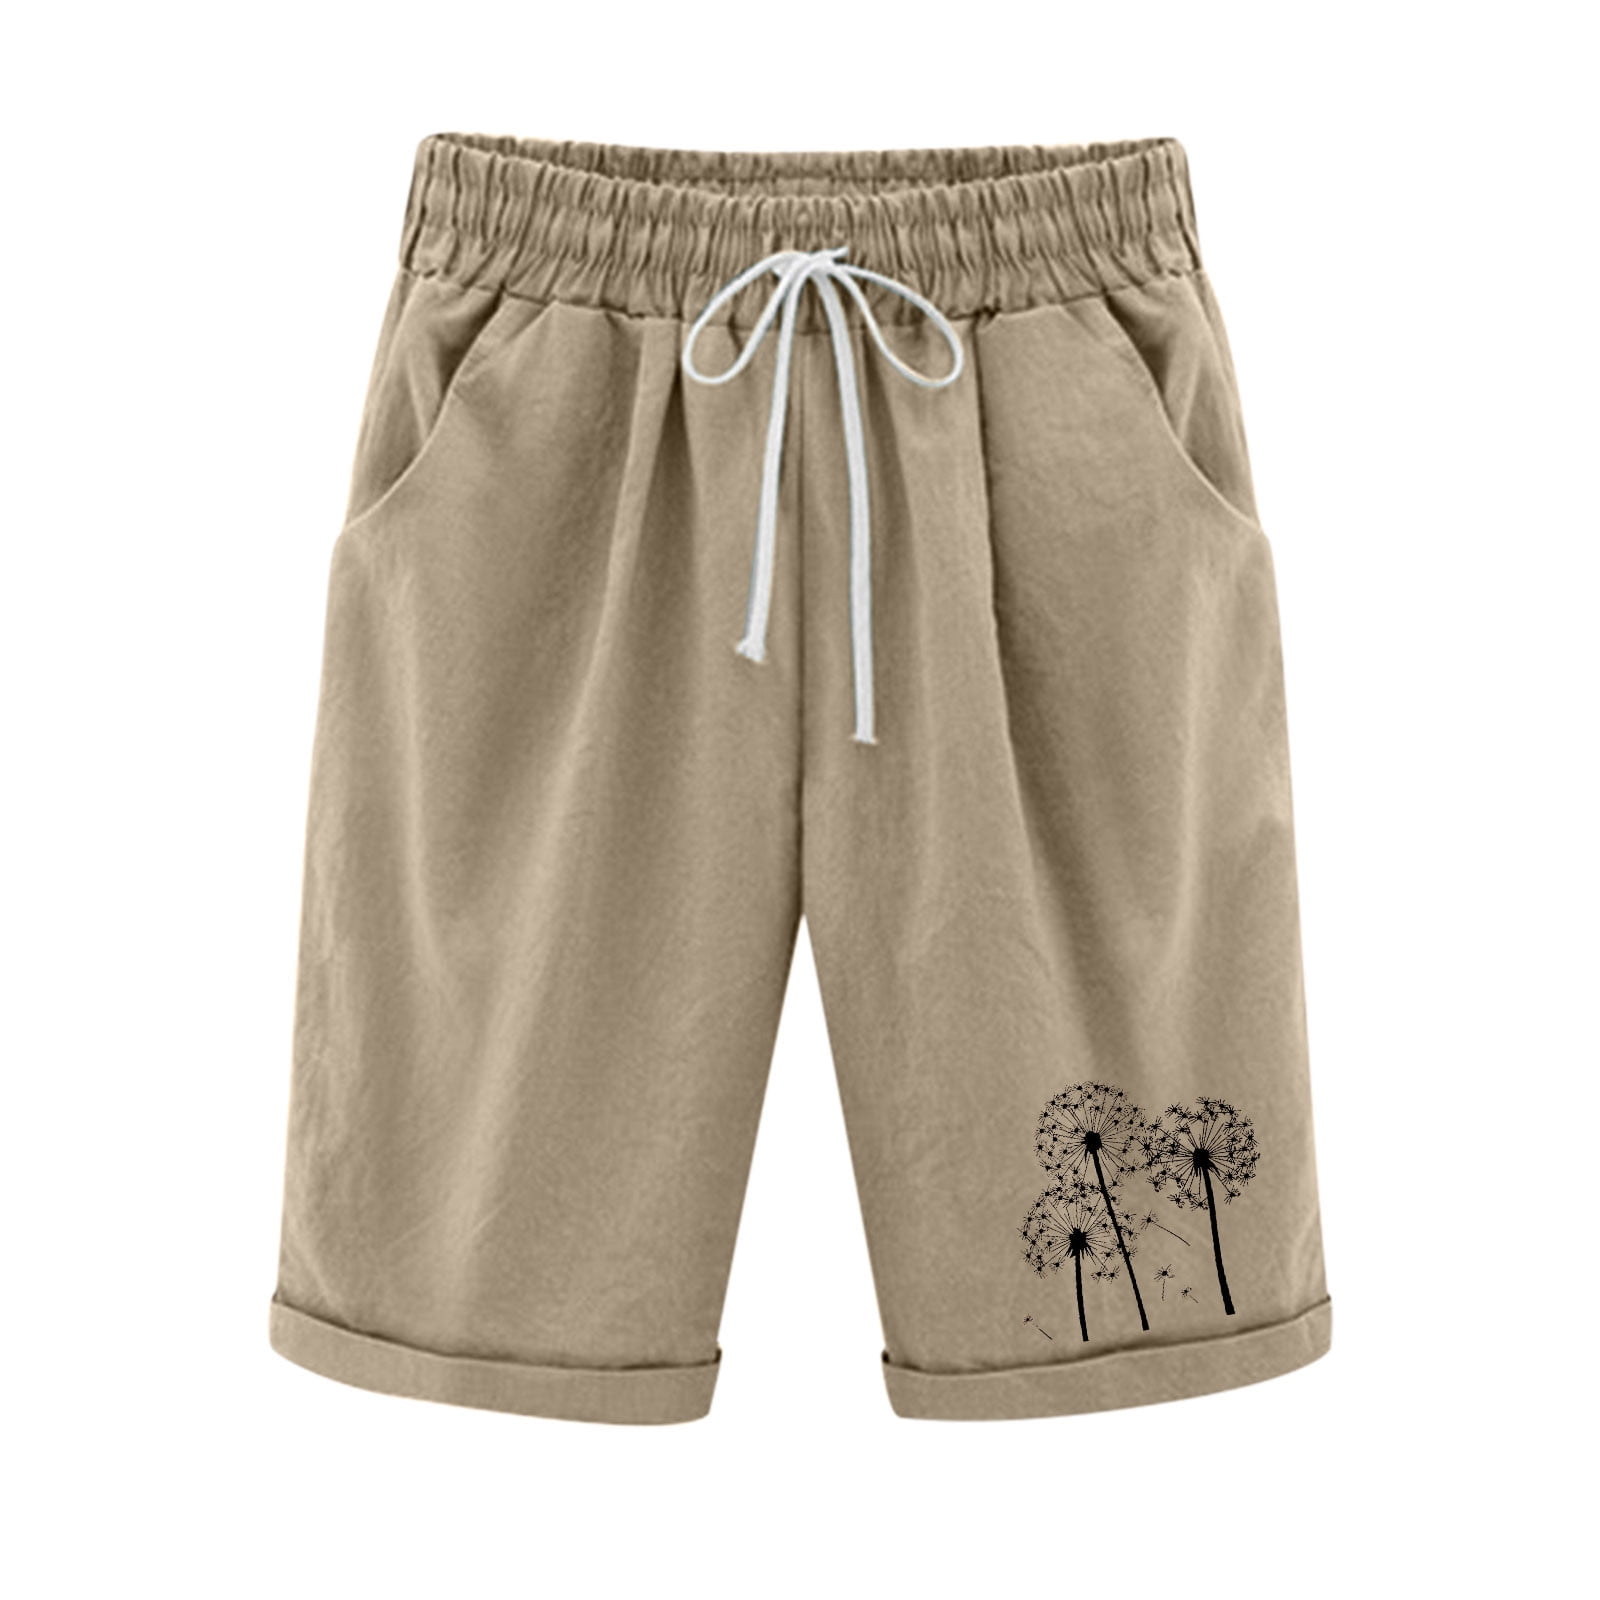 Cotton Mesh Men's Bermuda Shorts